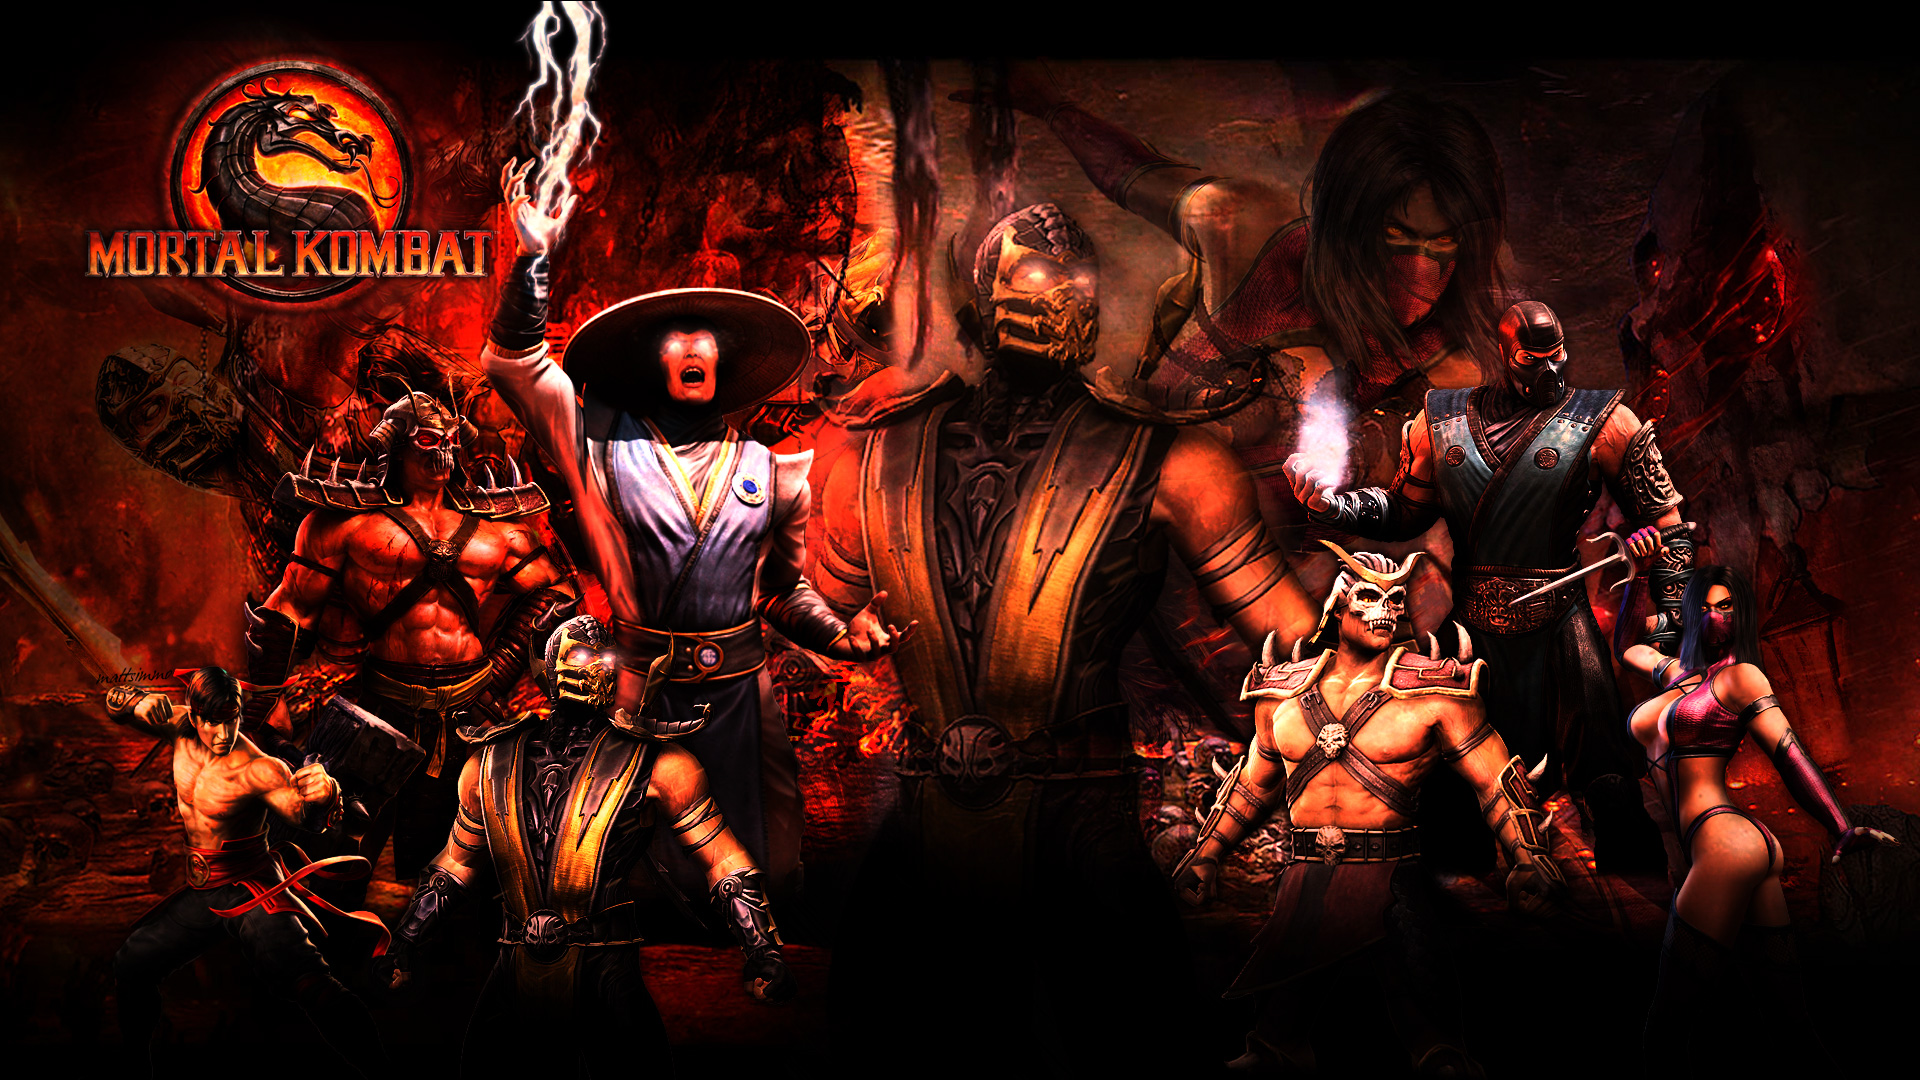 Mortal Kombat 9 Wallpapers in HD Page 4